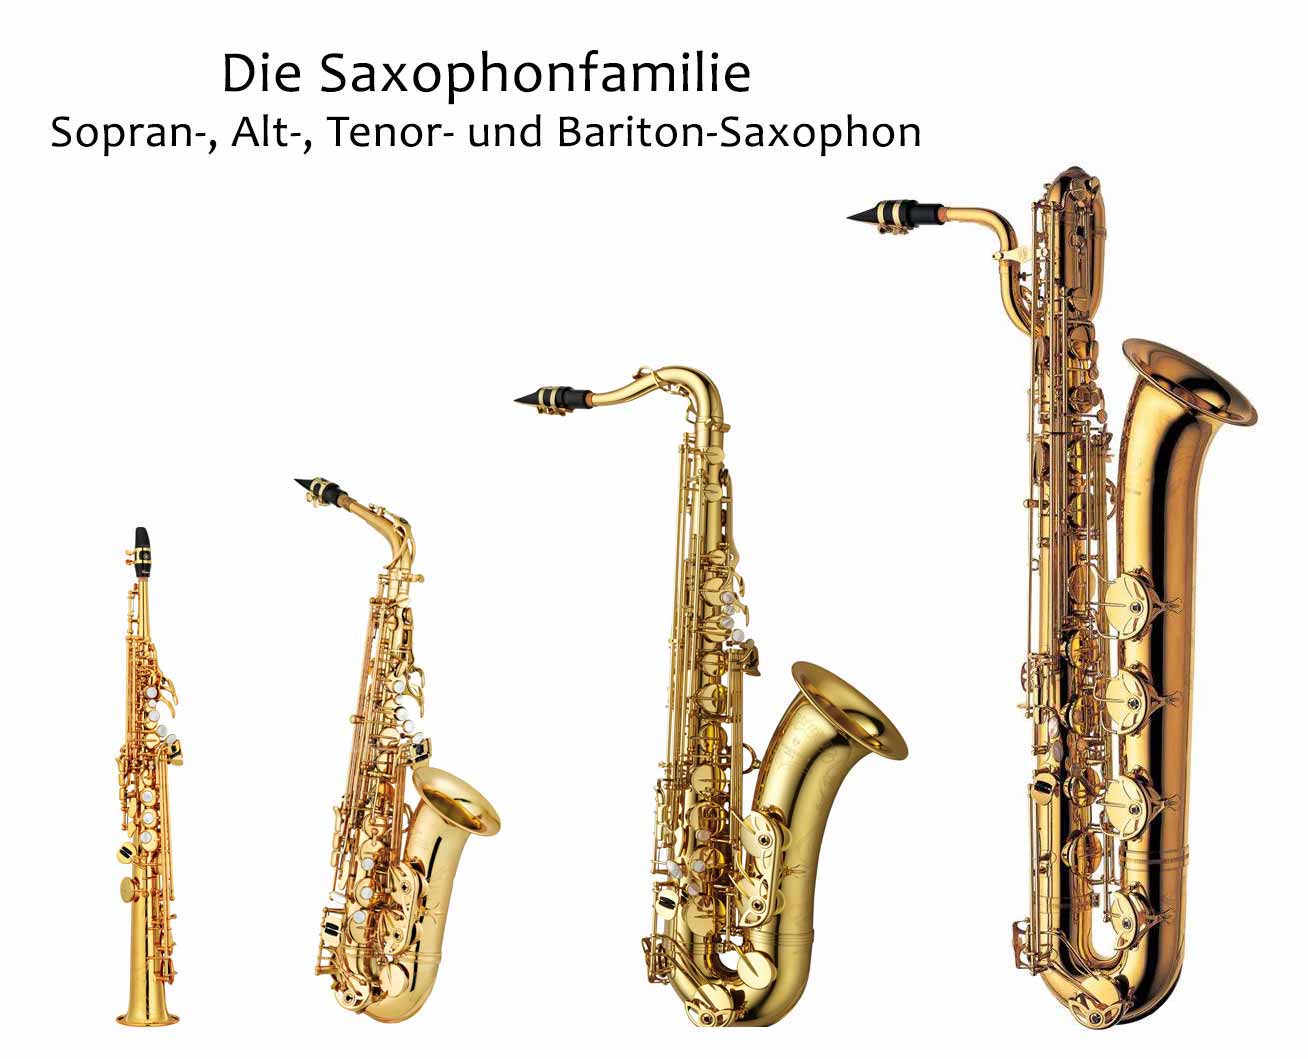 2022-12-09_salinia_inpost_das-saxophon_saxophonfamilie